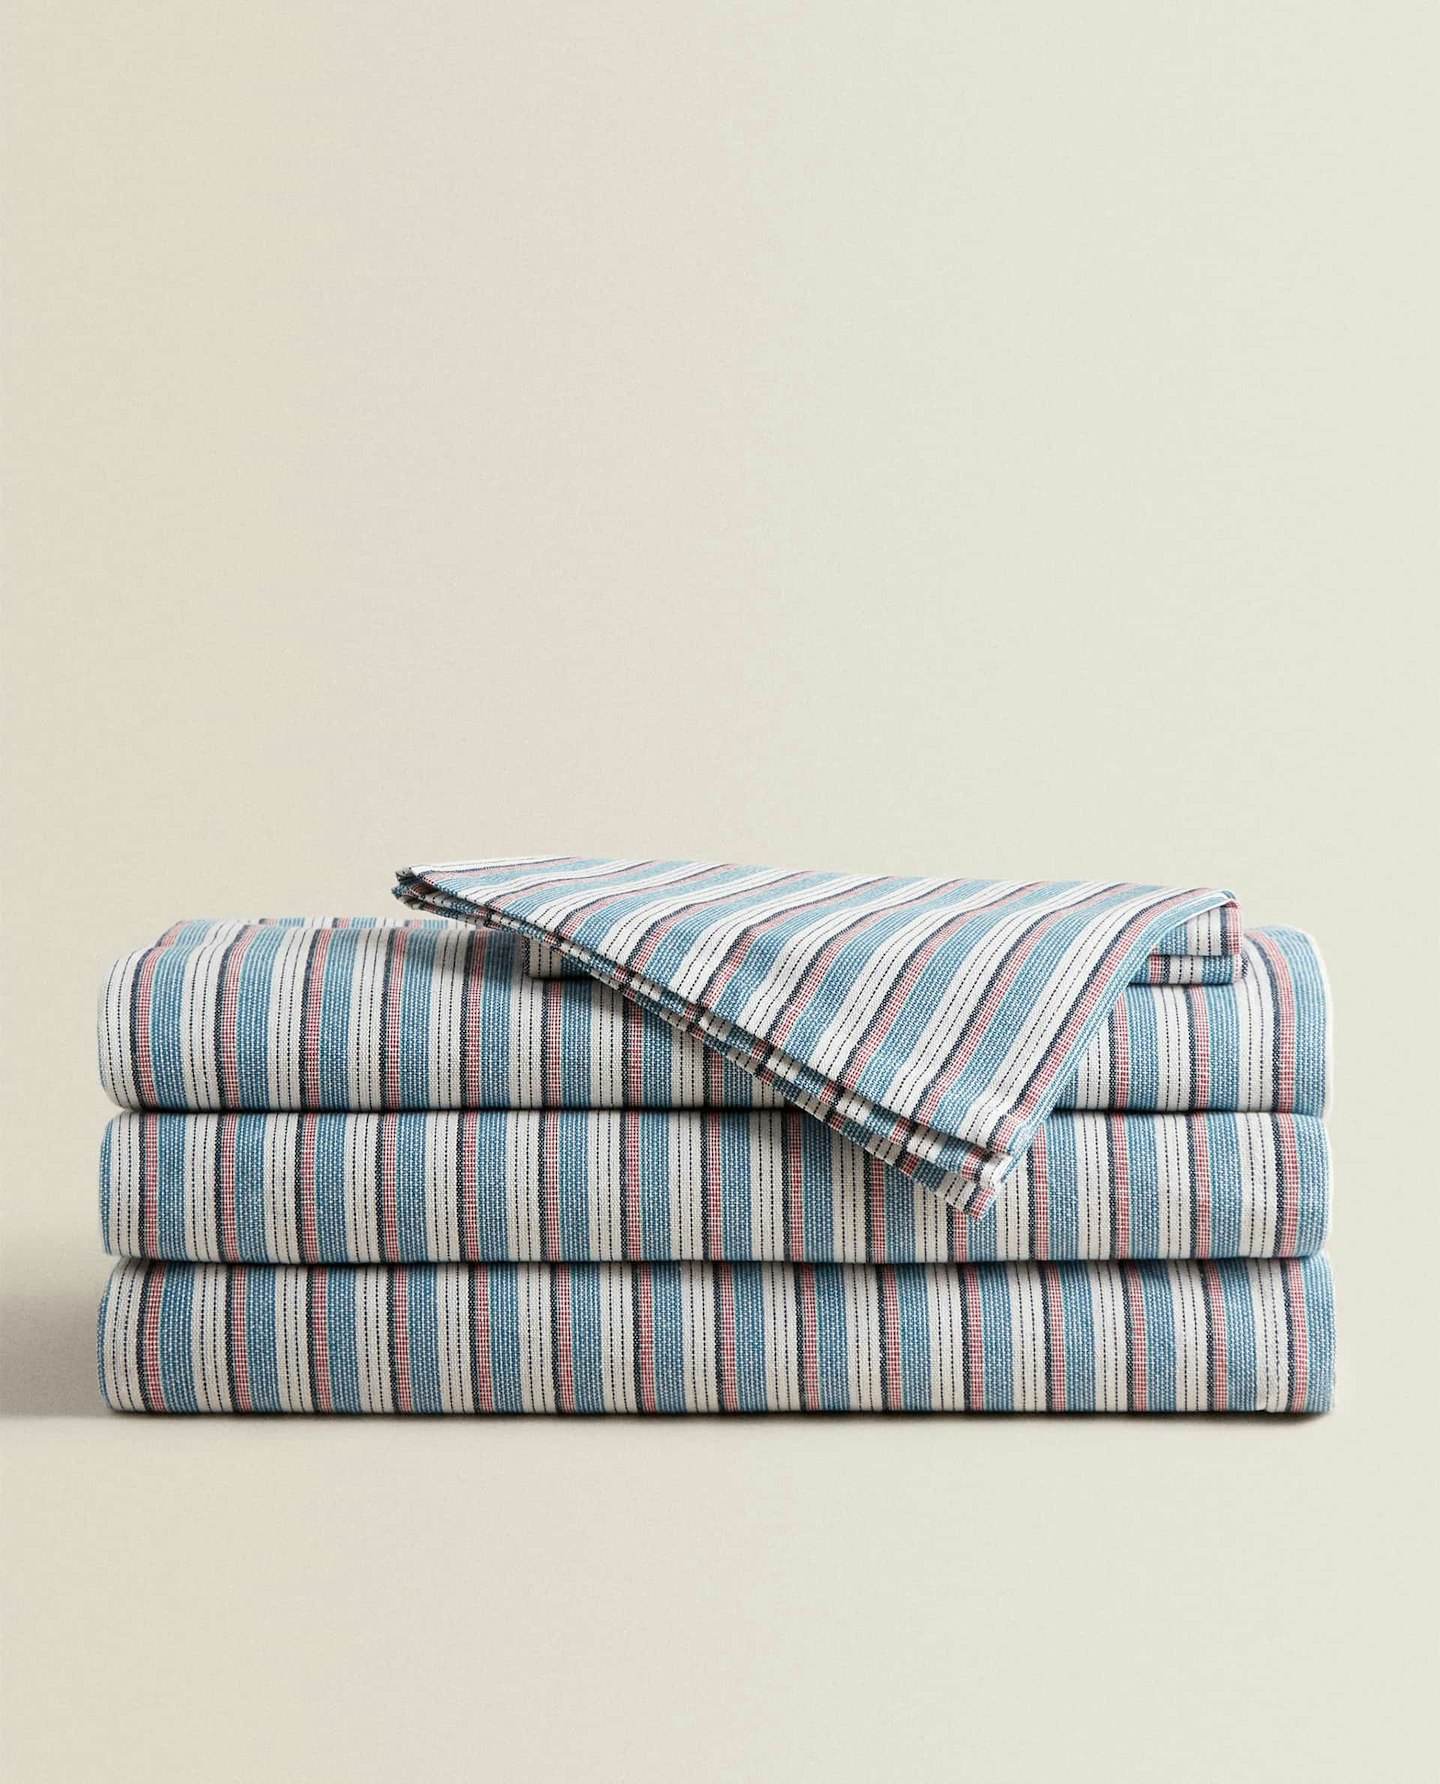 Zara Home, Stripe Tablecloth, WAS £29.99, NOW £15.99